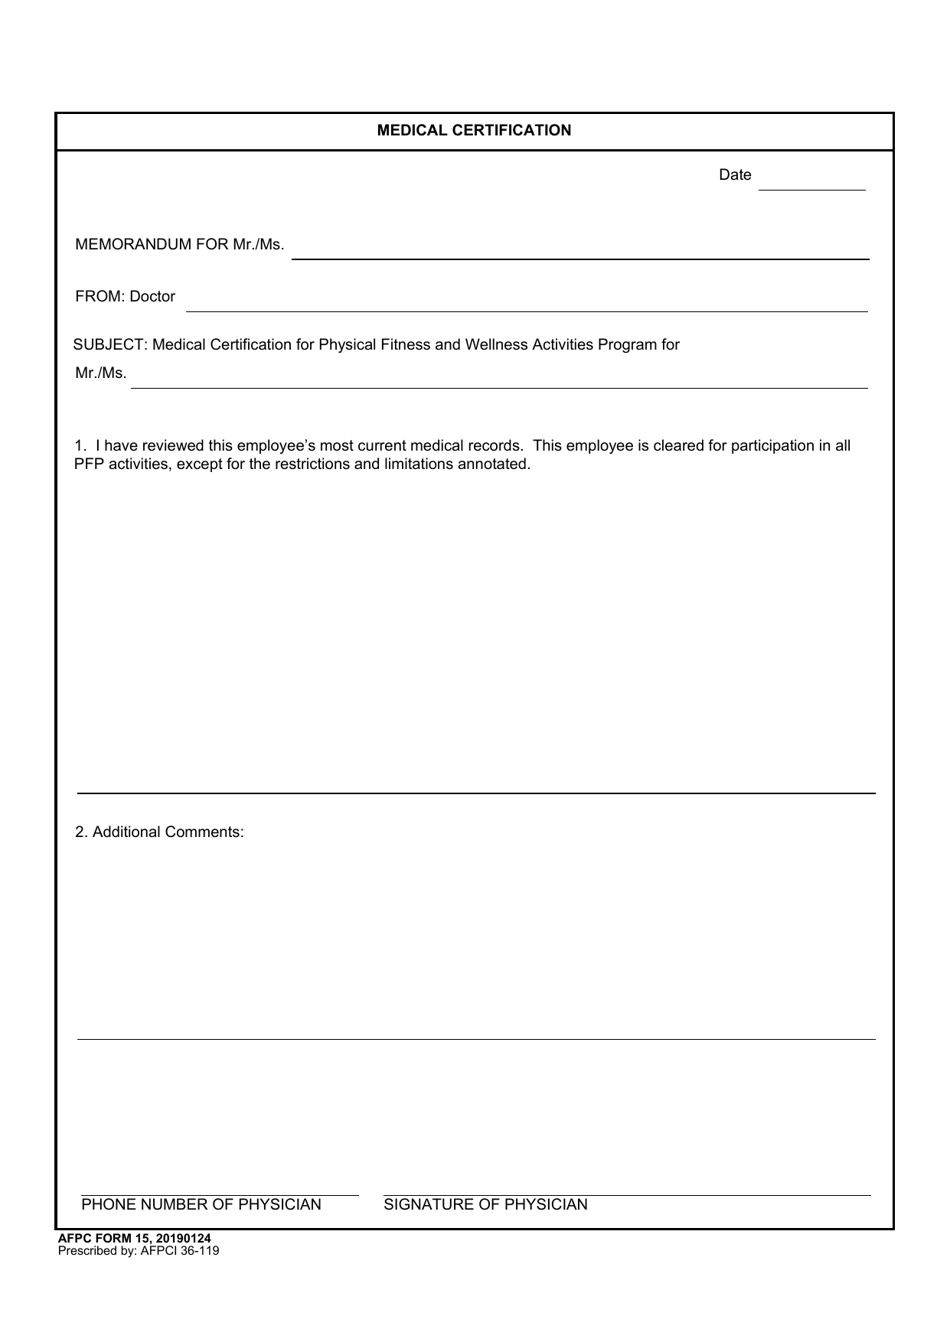 AFPC Form 15 Medical Certification, Page 1